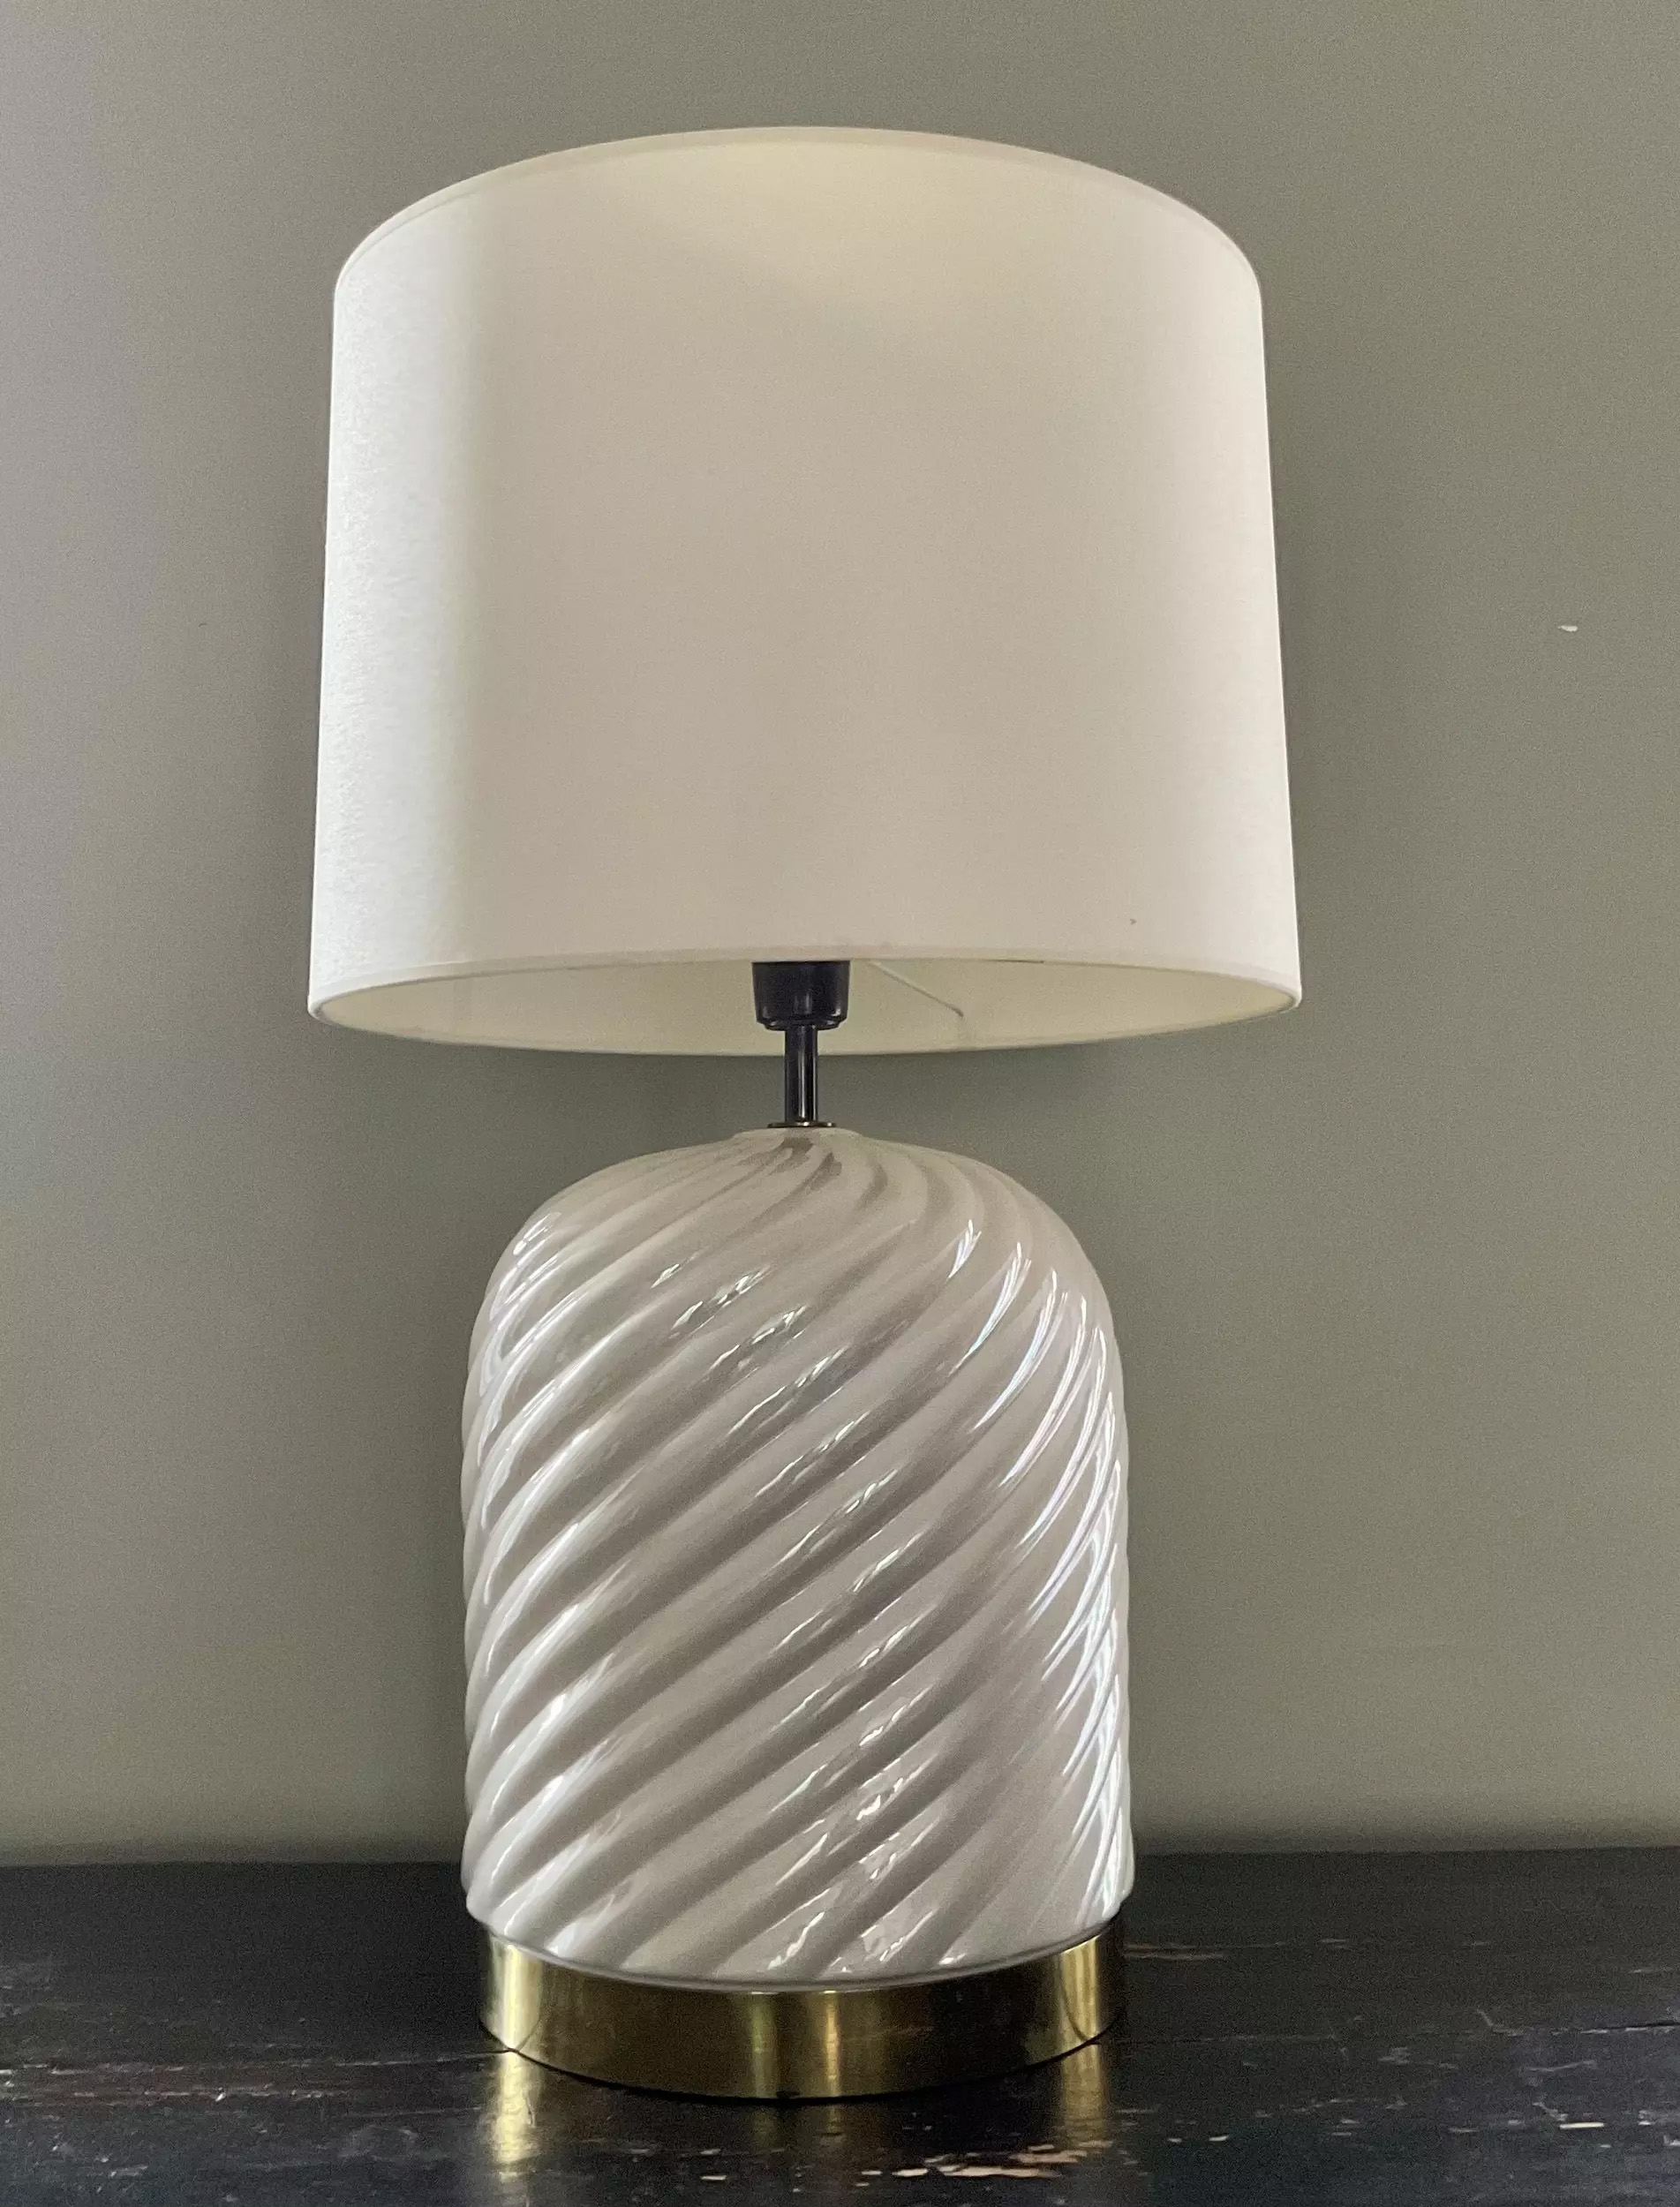 Lampe Tommaso Barbi - Lampe de table design - Galerie Georgette